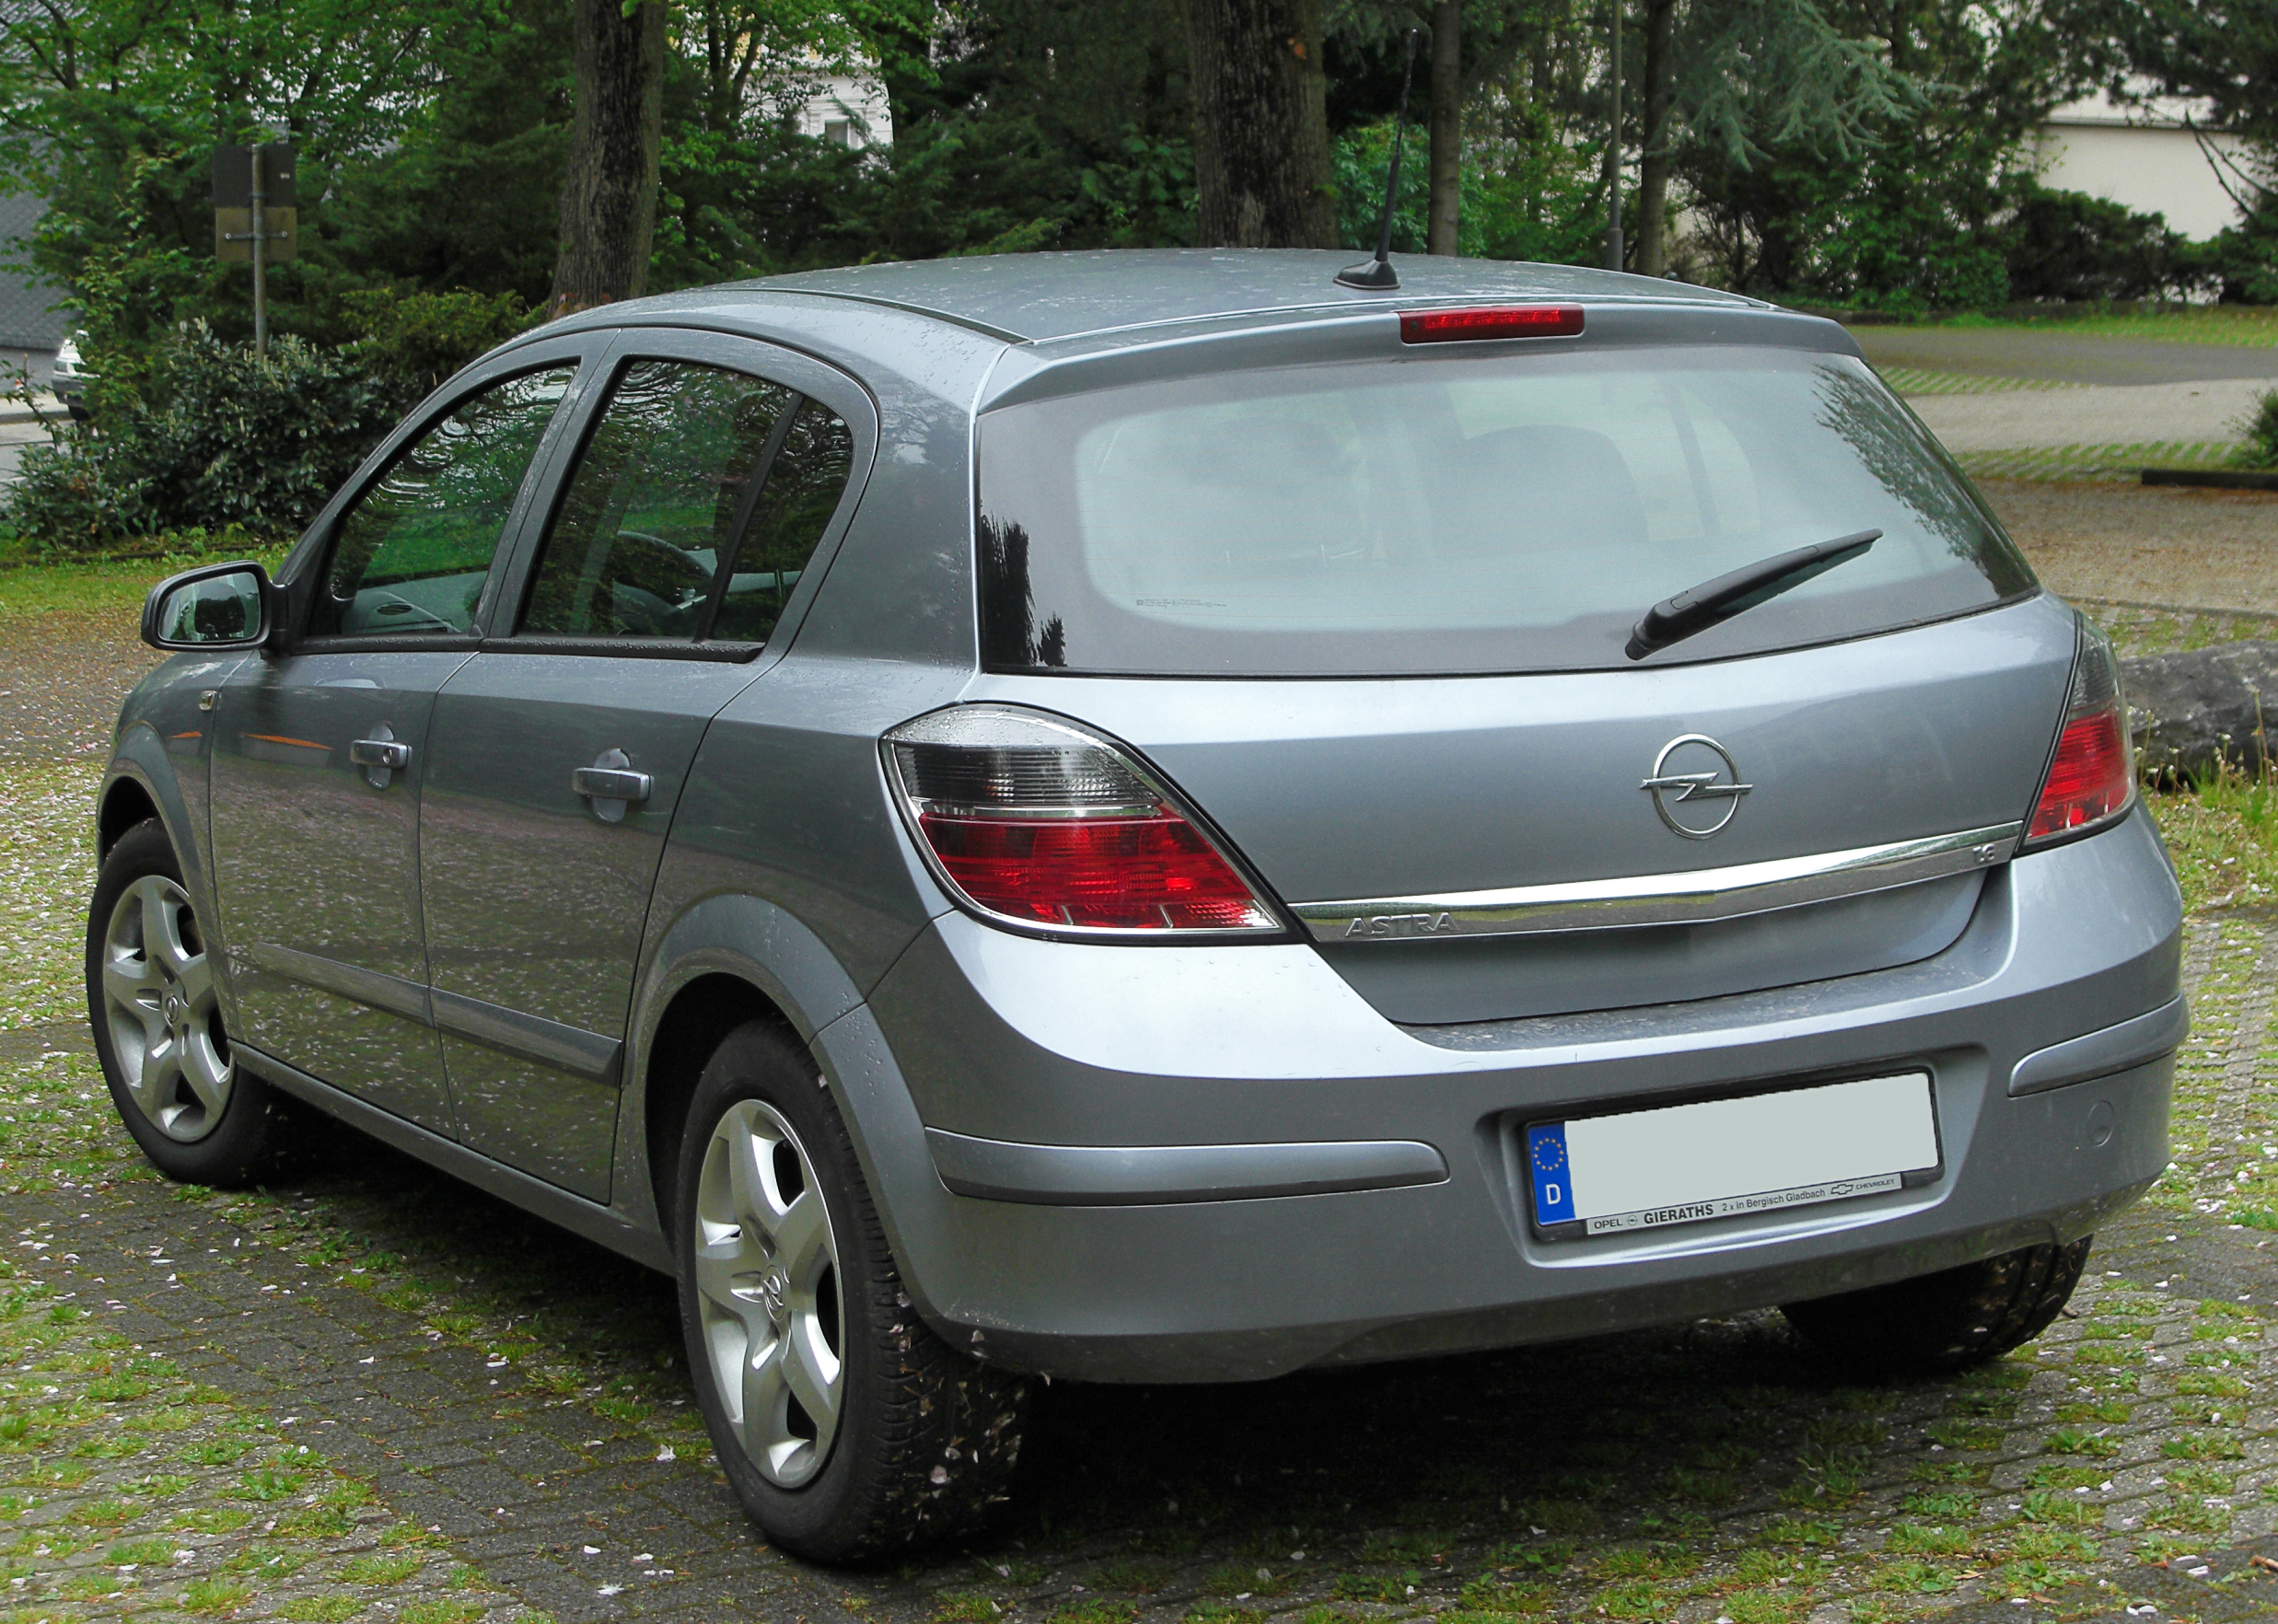 Opel Astra H - Wikidata